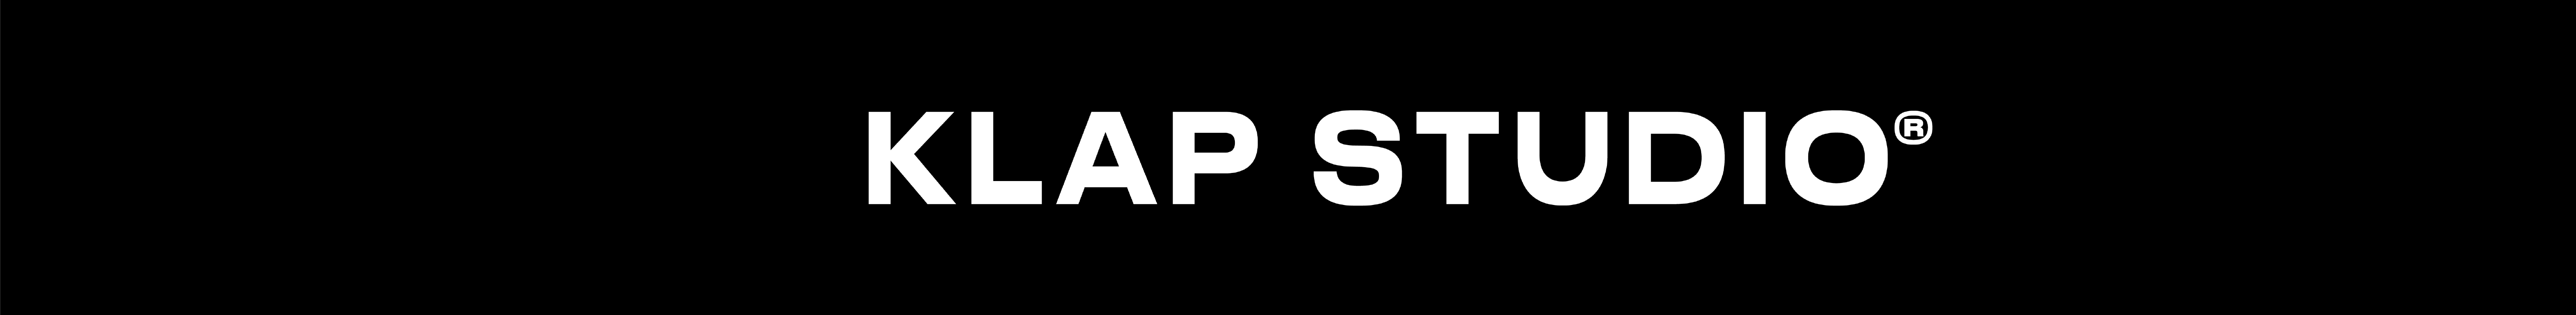 Klap Studio's profile banner